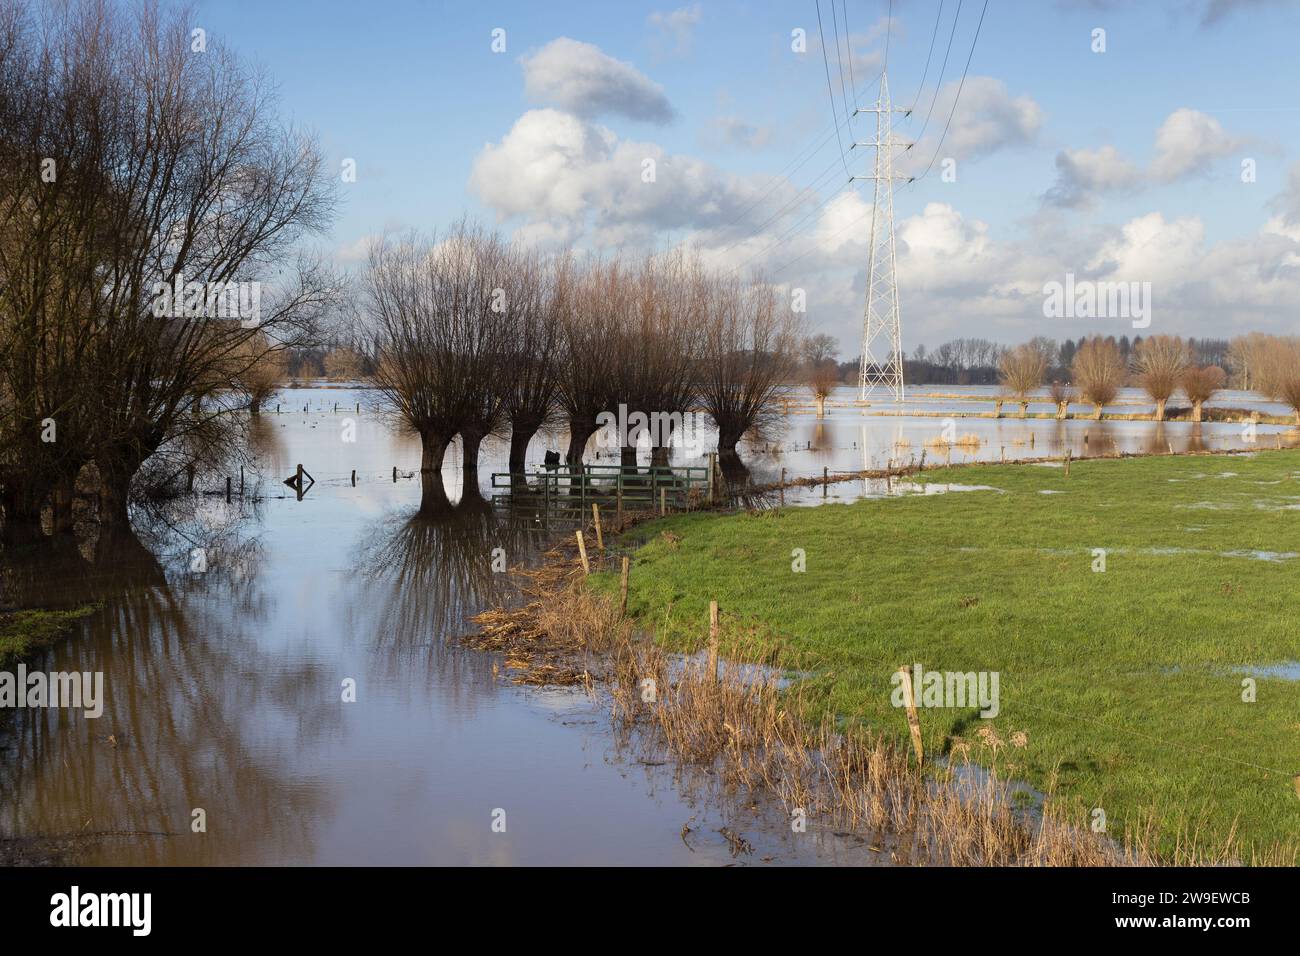 Seasonal Flooding at Denderbellebroek (Bellebroek) in East Flanders, Belgium. It is part of the Beneden-Dender nature reserve and a flood plain for th Stock Photo